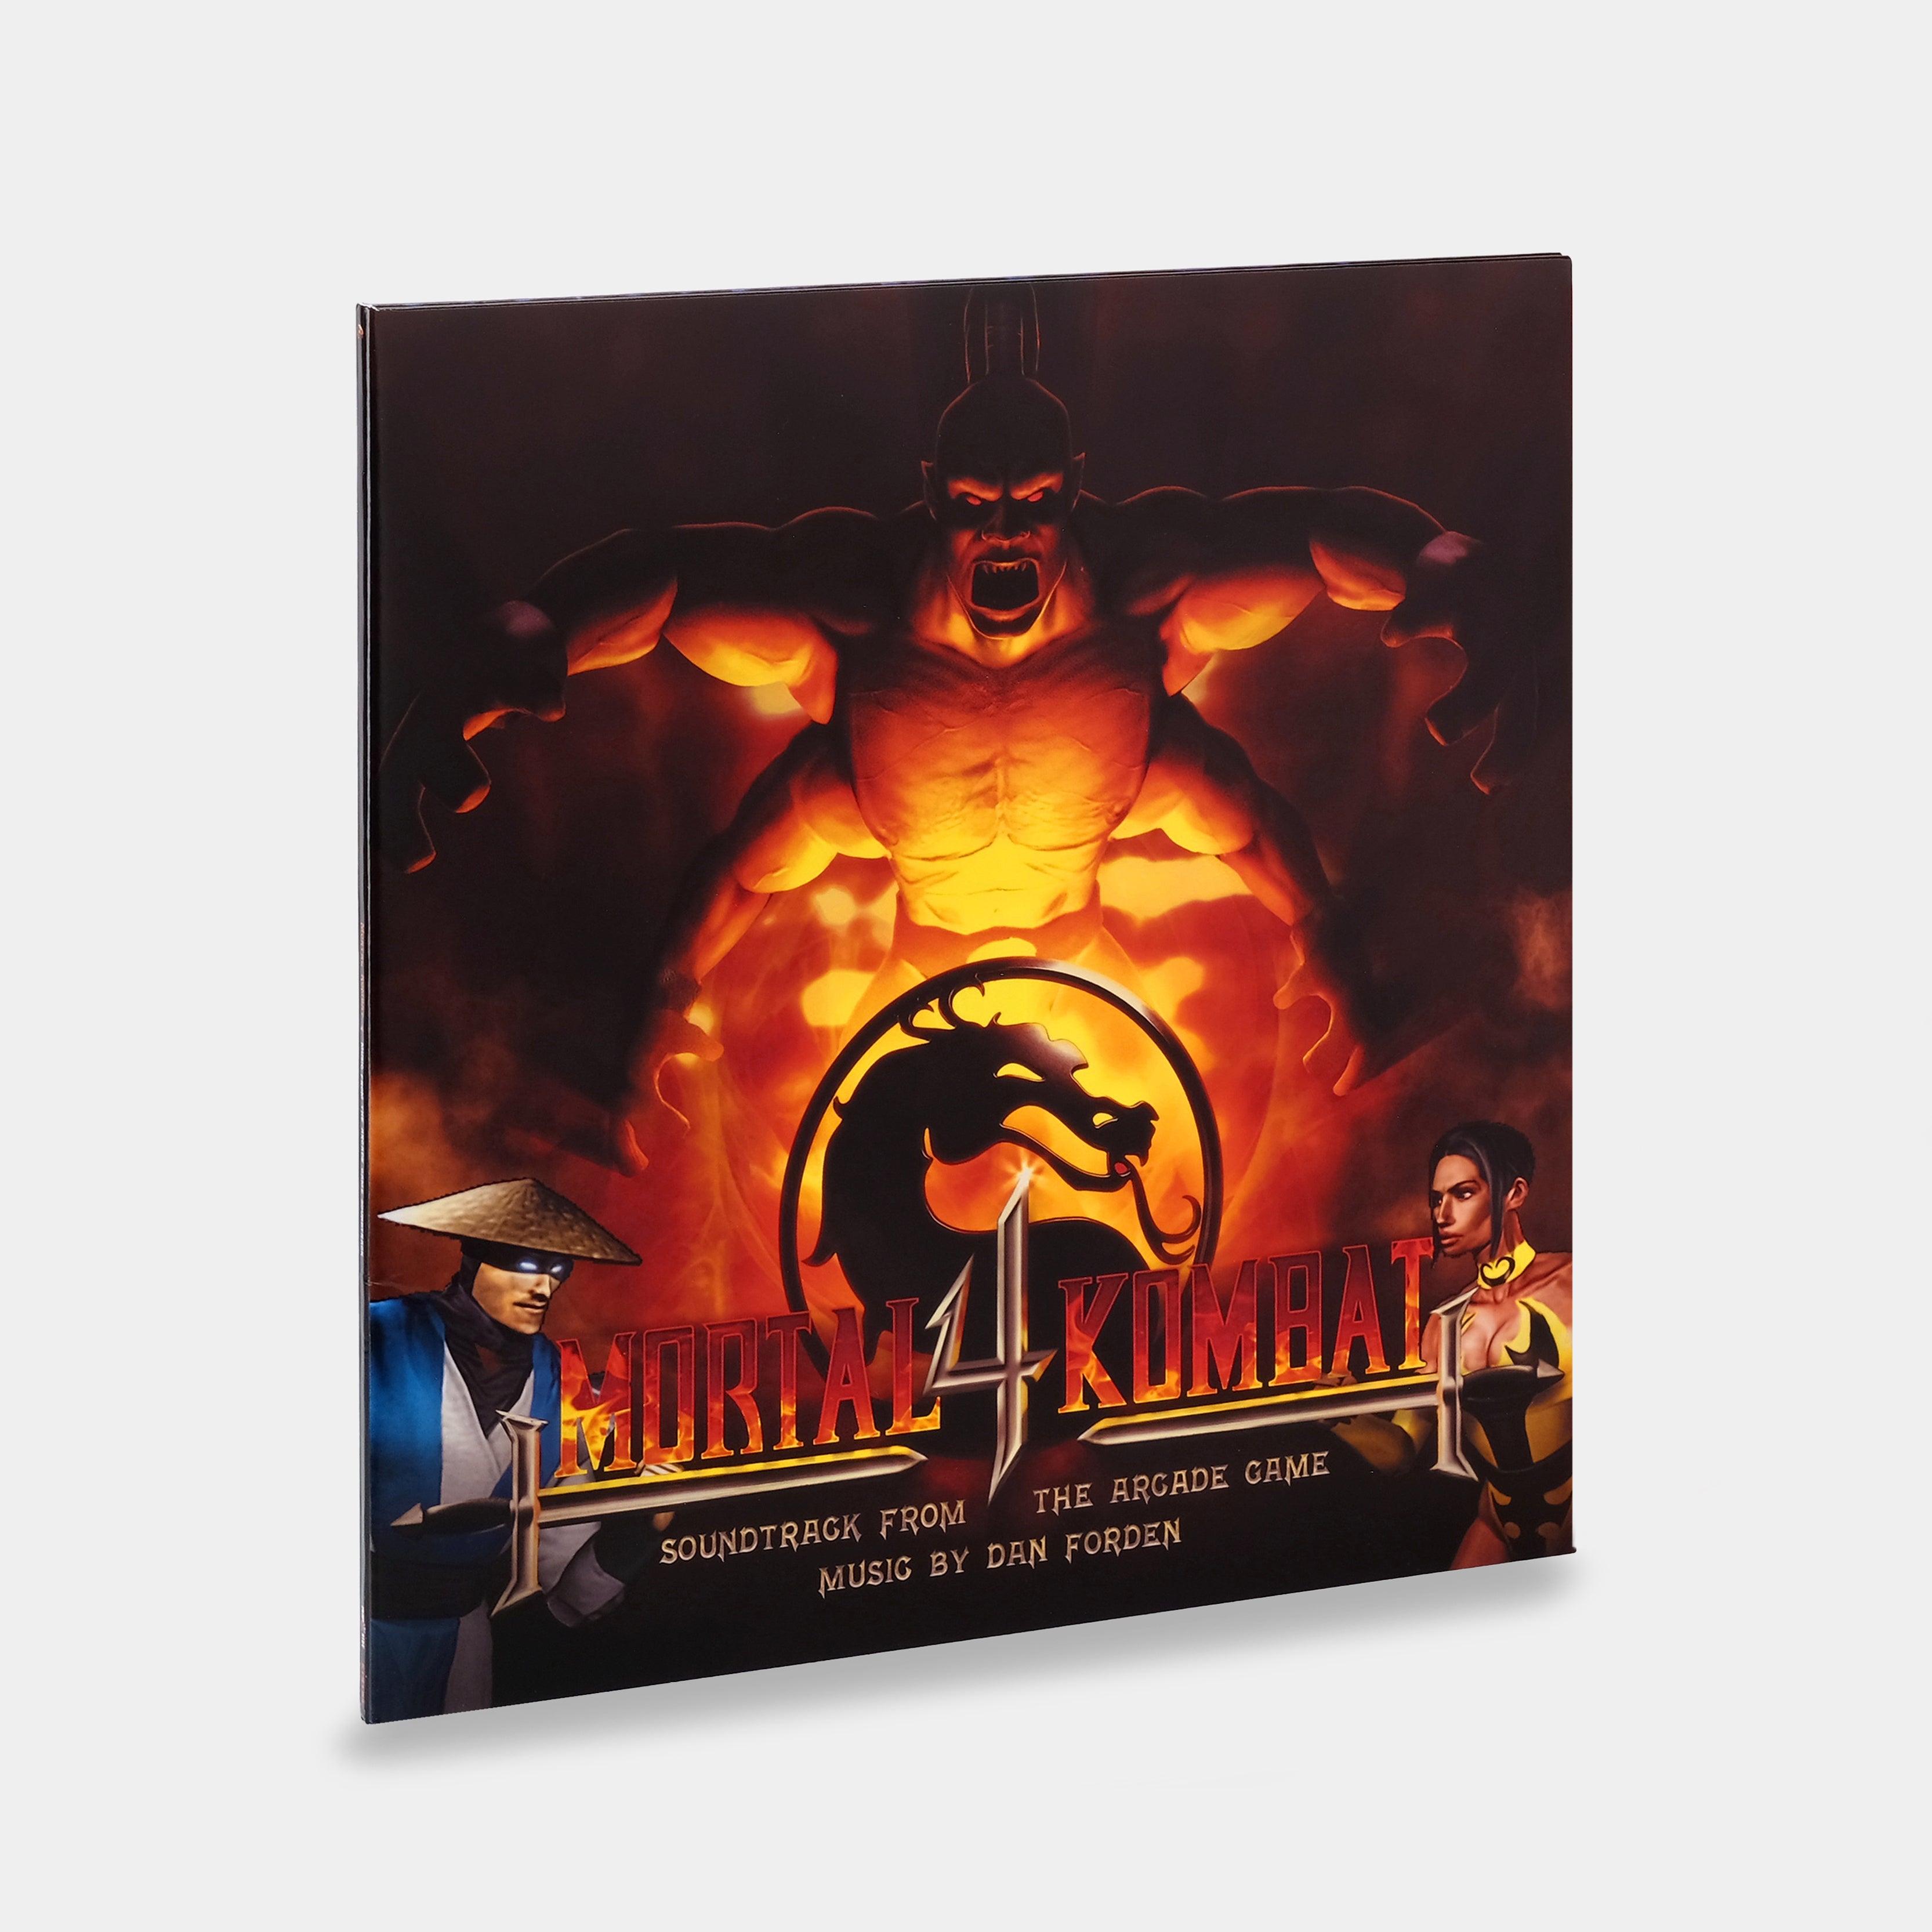 Dan Forden - Mortal Kombat 4 (Soundtrack From The Arcade Game) LP Red & Yellow Swirl Vinyl Record